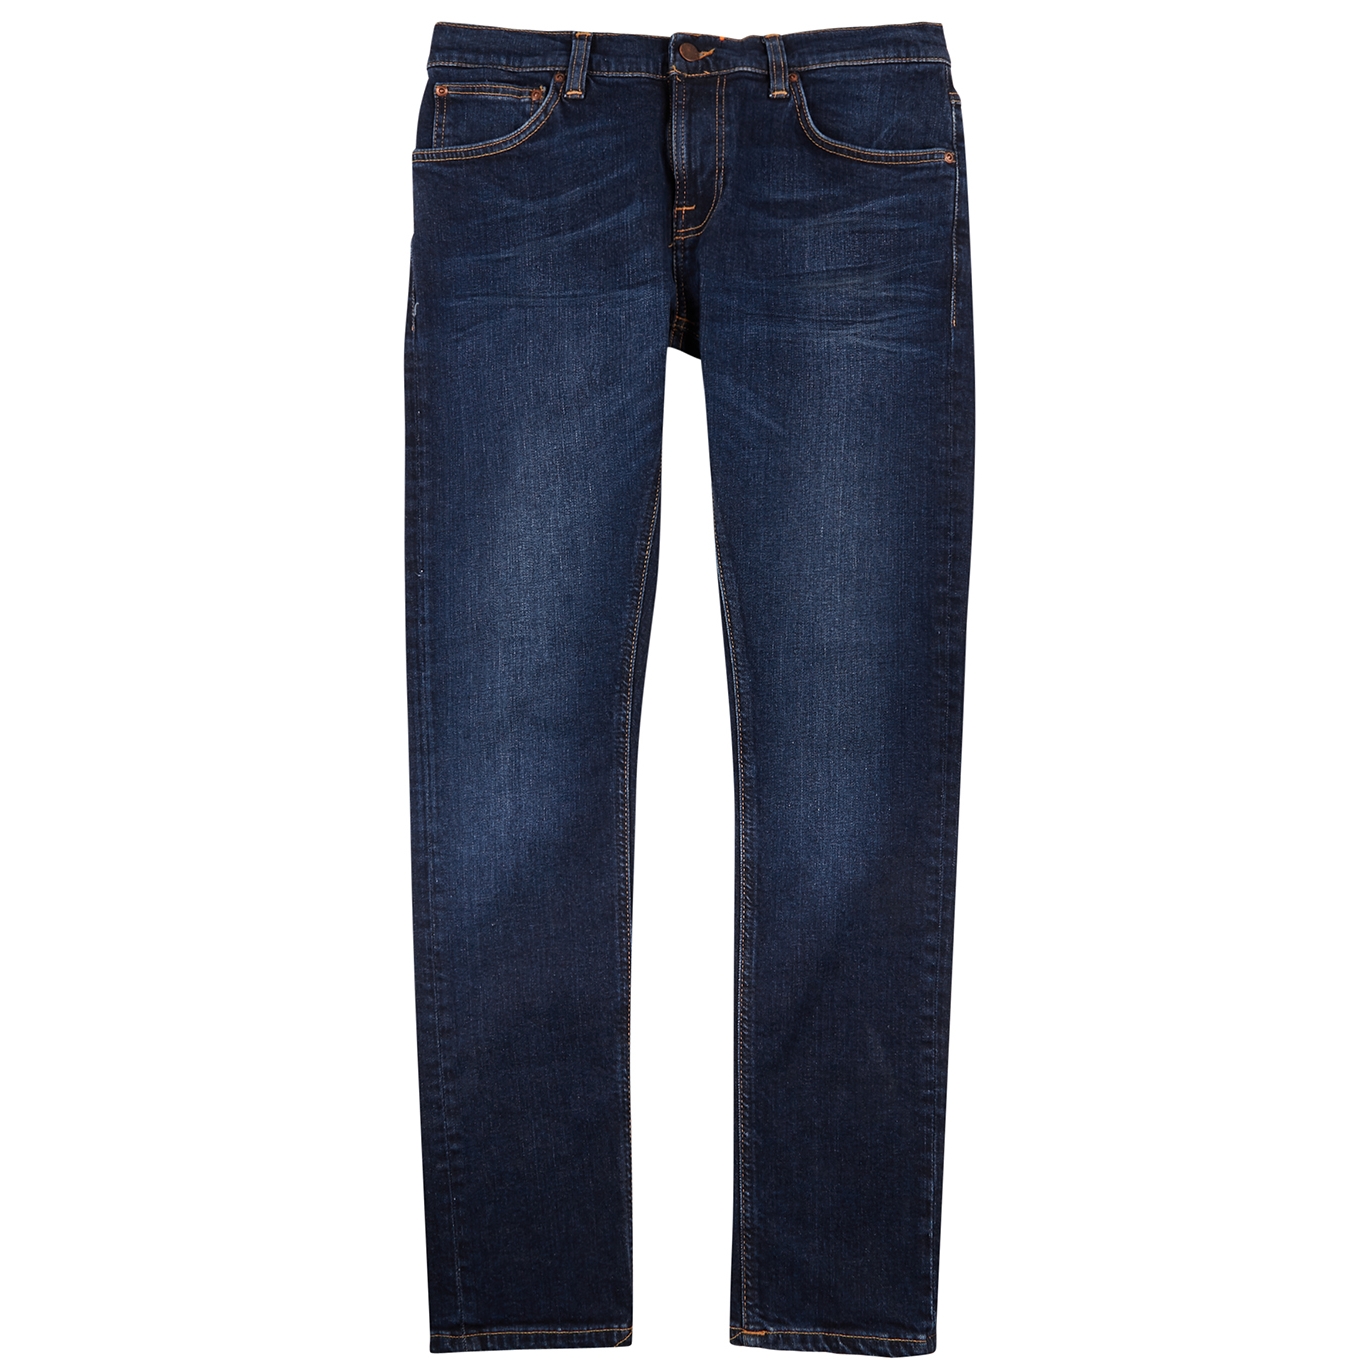 Nudie Jeans Tight Terry Dark Blue Skinny Jeans - W30